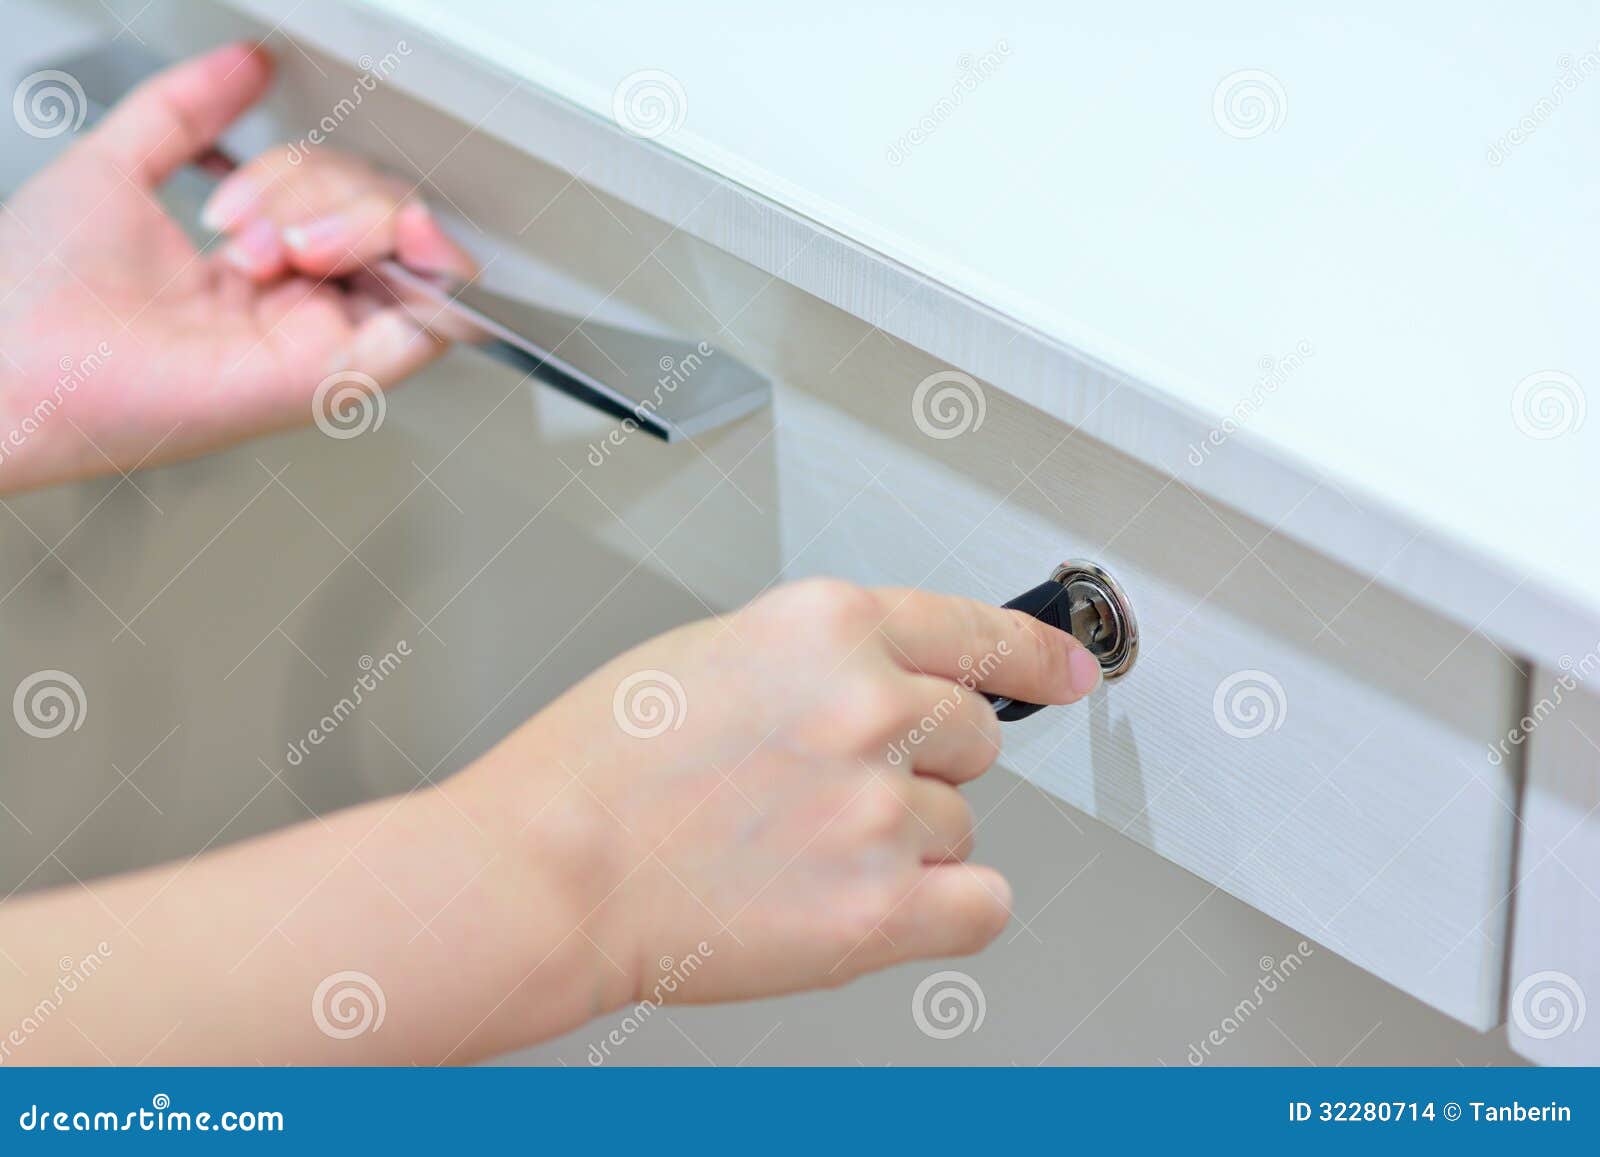 hands locking and checking drawer